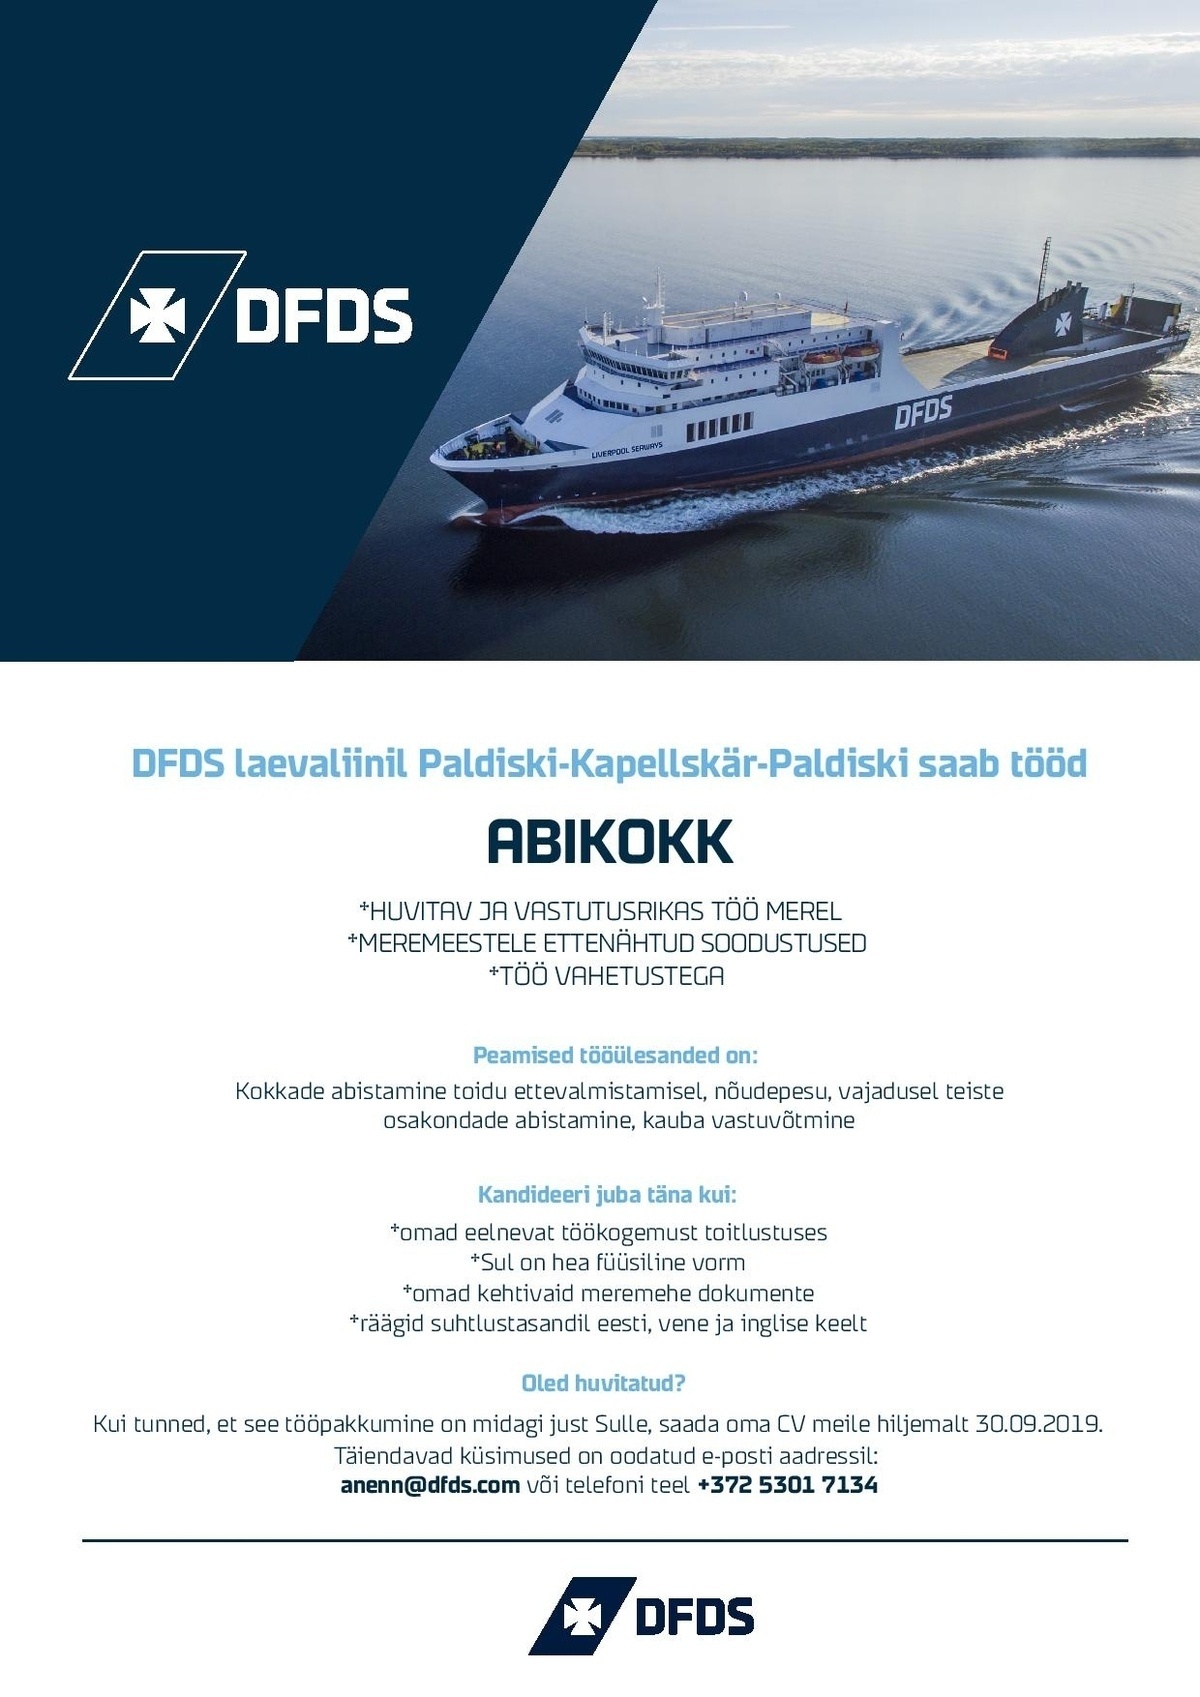 DFDS A/S Eesti Filiaal Abikokk